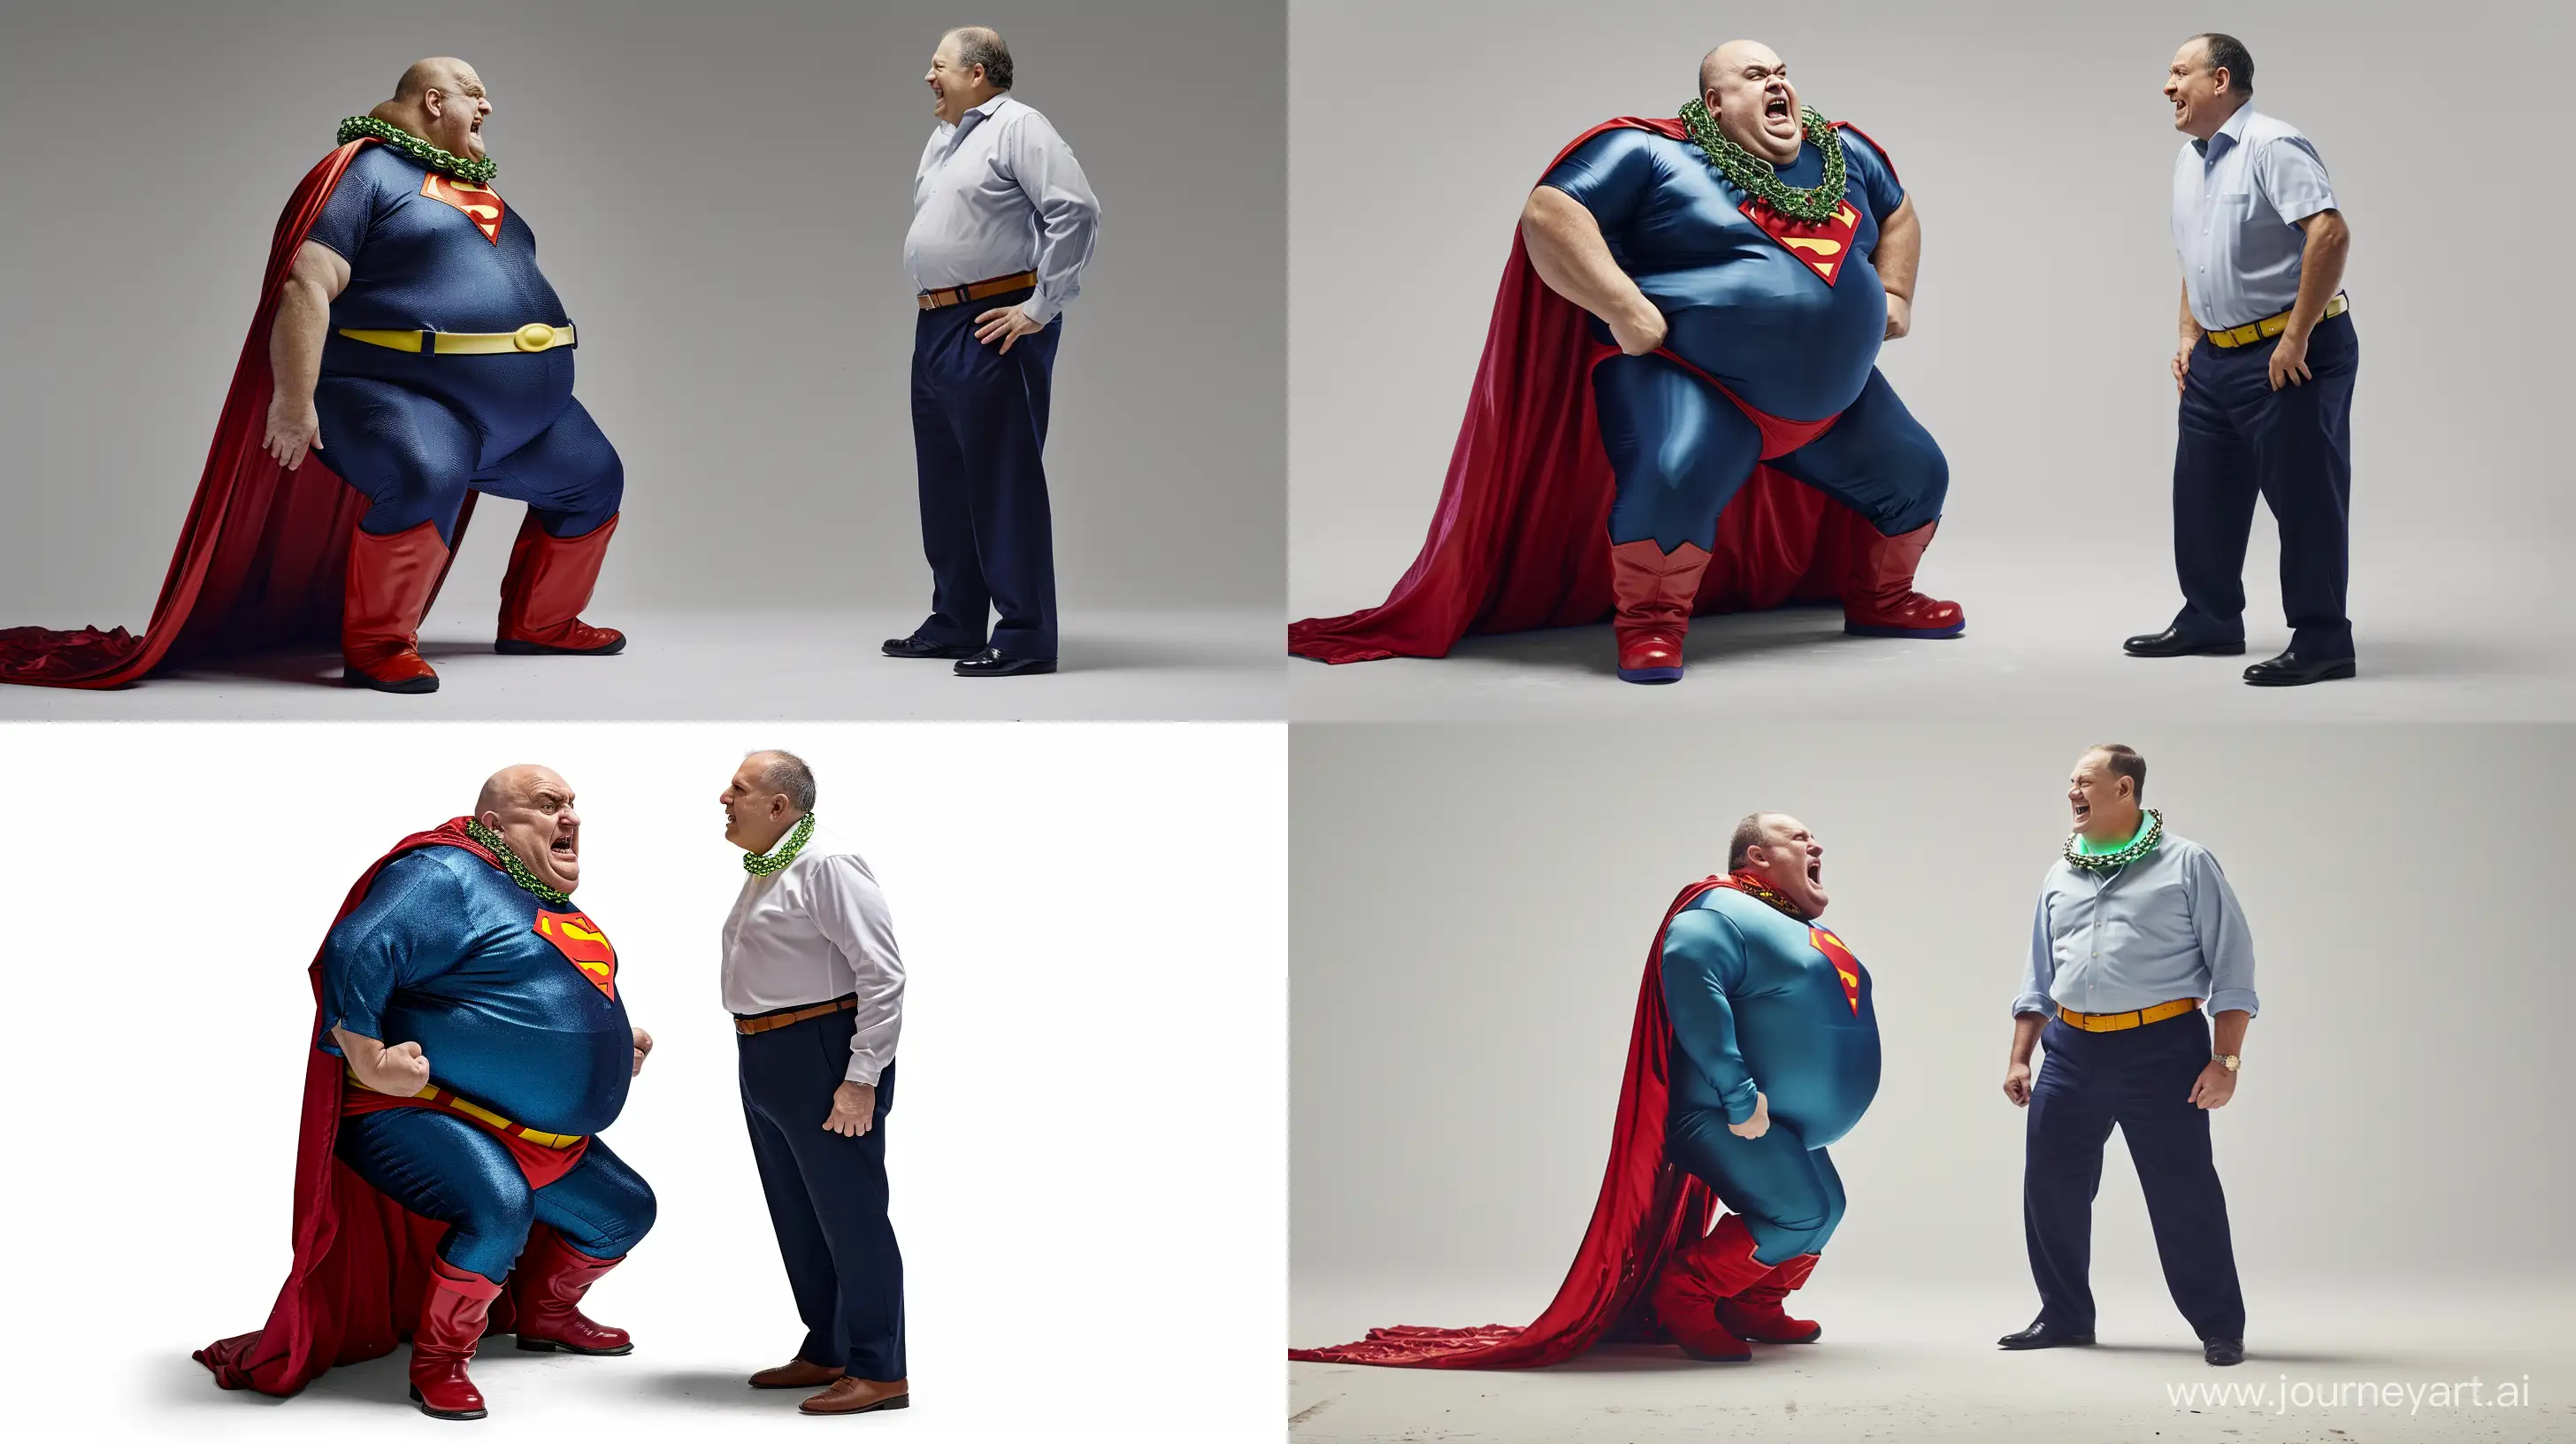 Intense-Encounter-Between-Elderly-Men-Angry-Superman-Confrontation